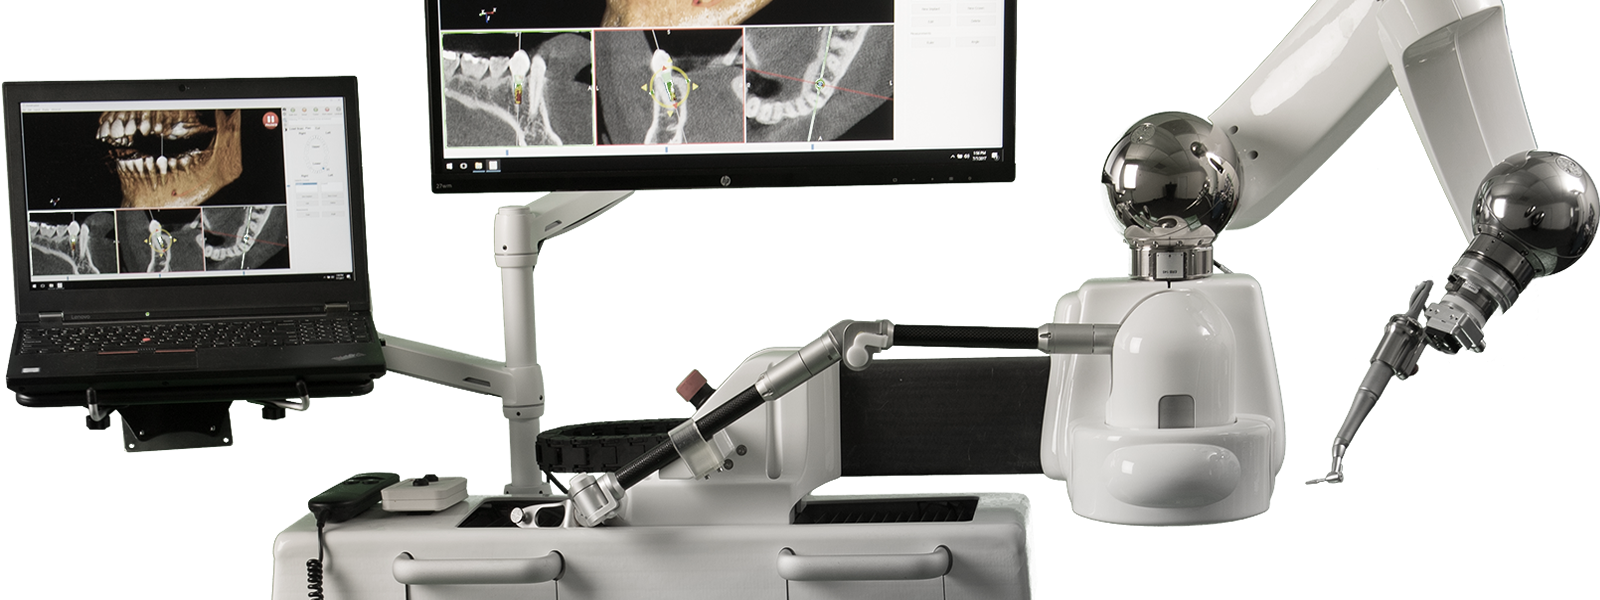 Dr.-Benjamin-Kur_Robot-Assisted-Dental-Implantology-Dental-Implant-Surgery